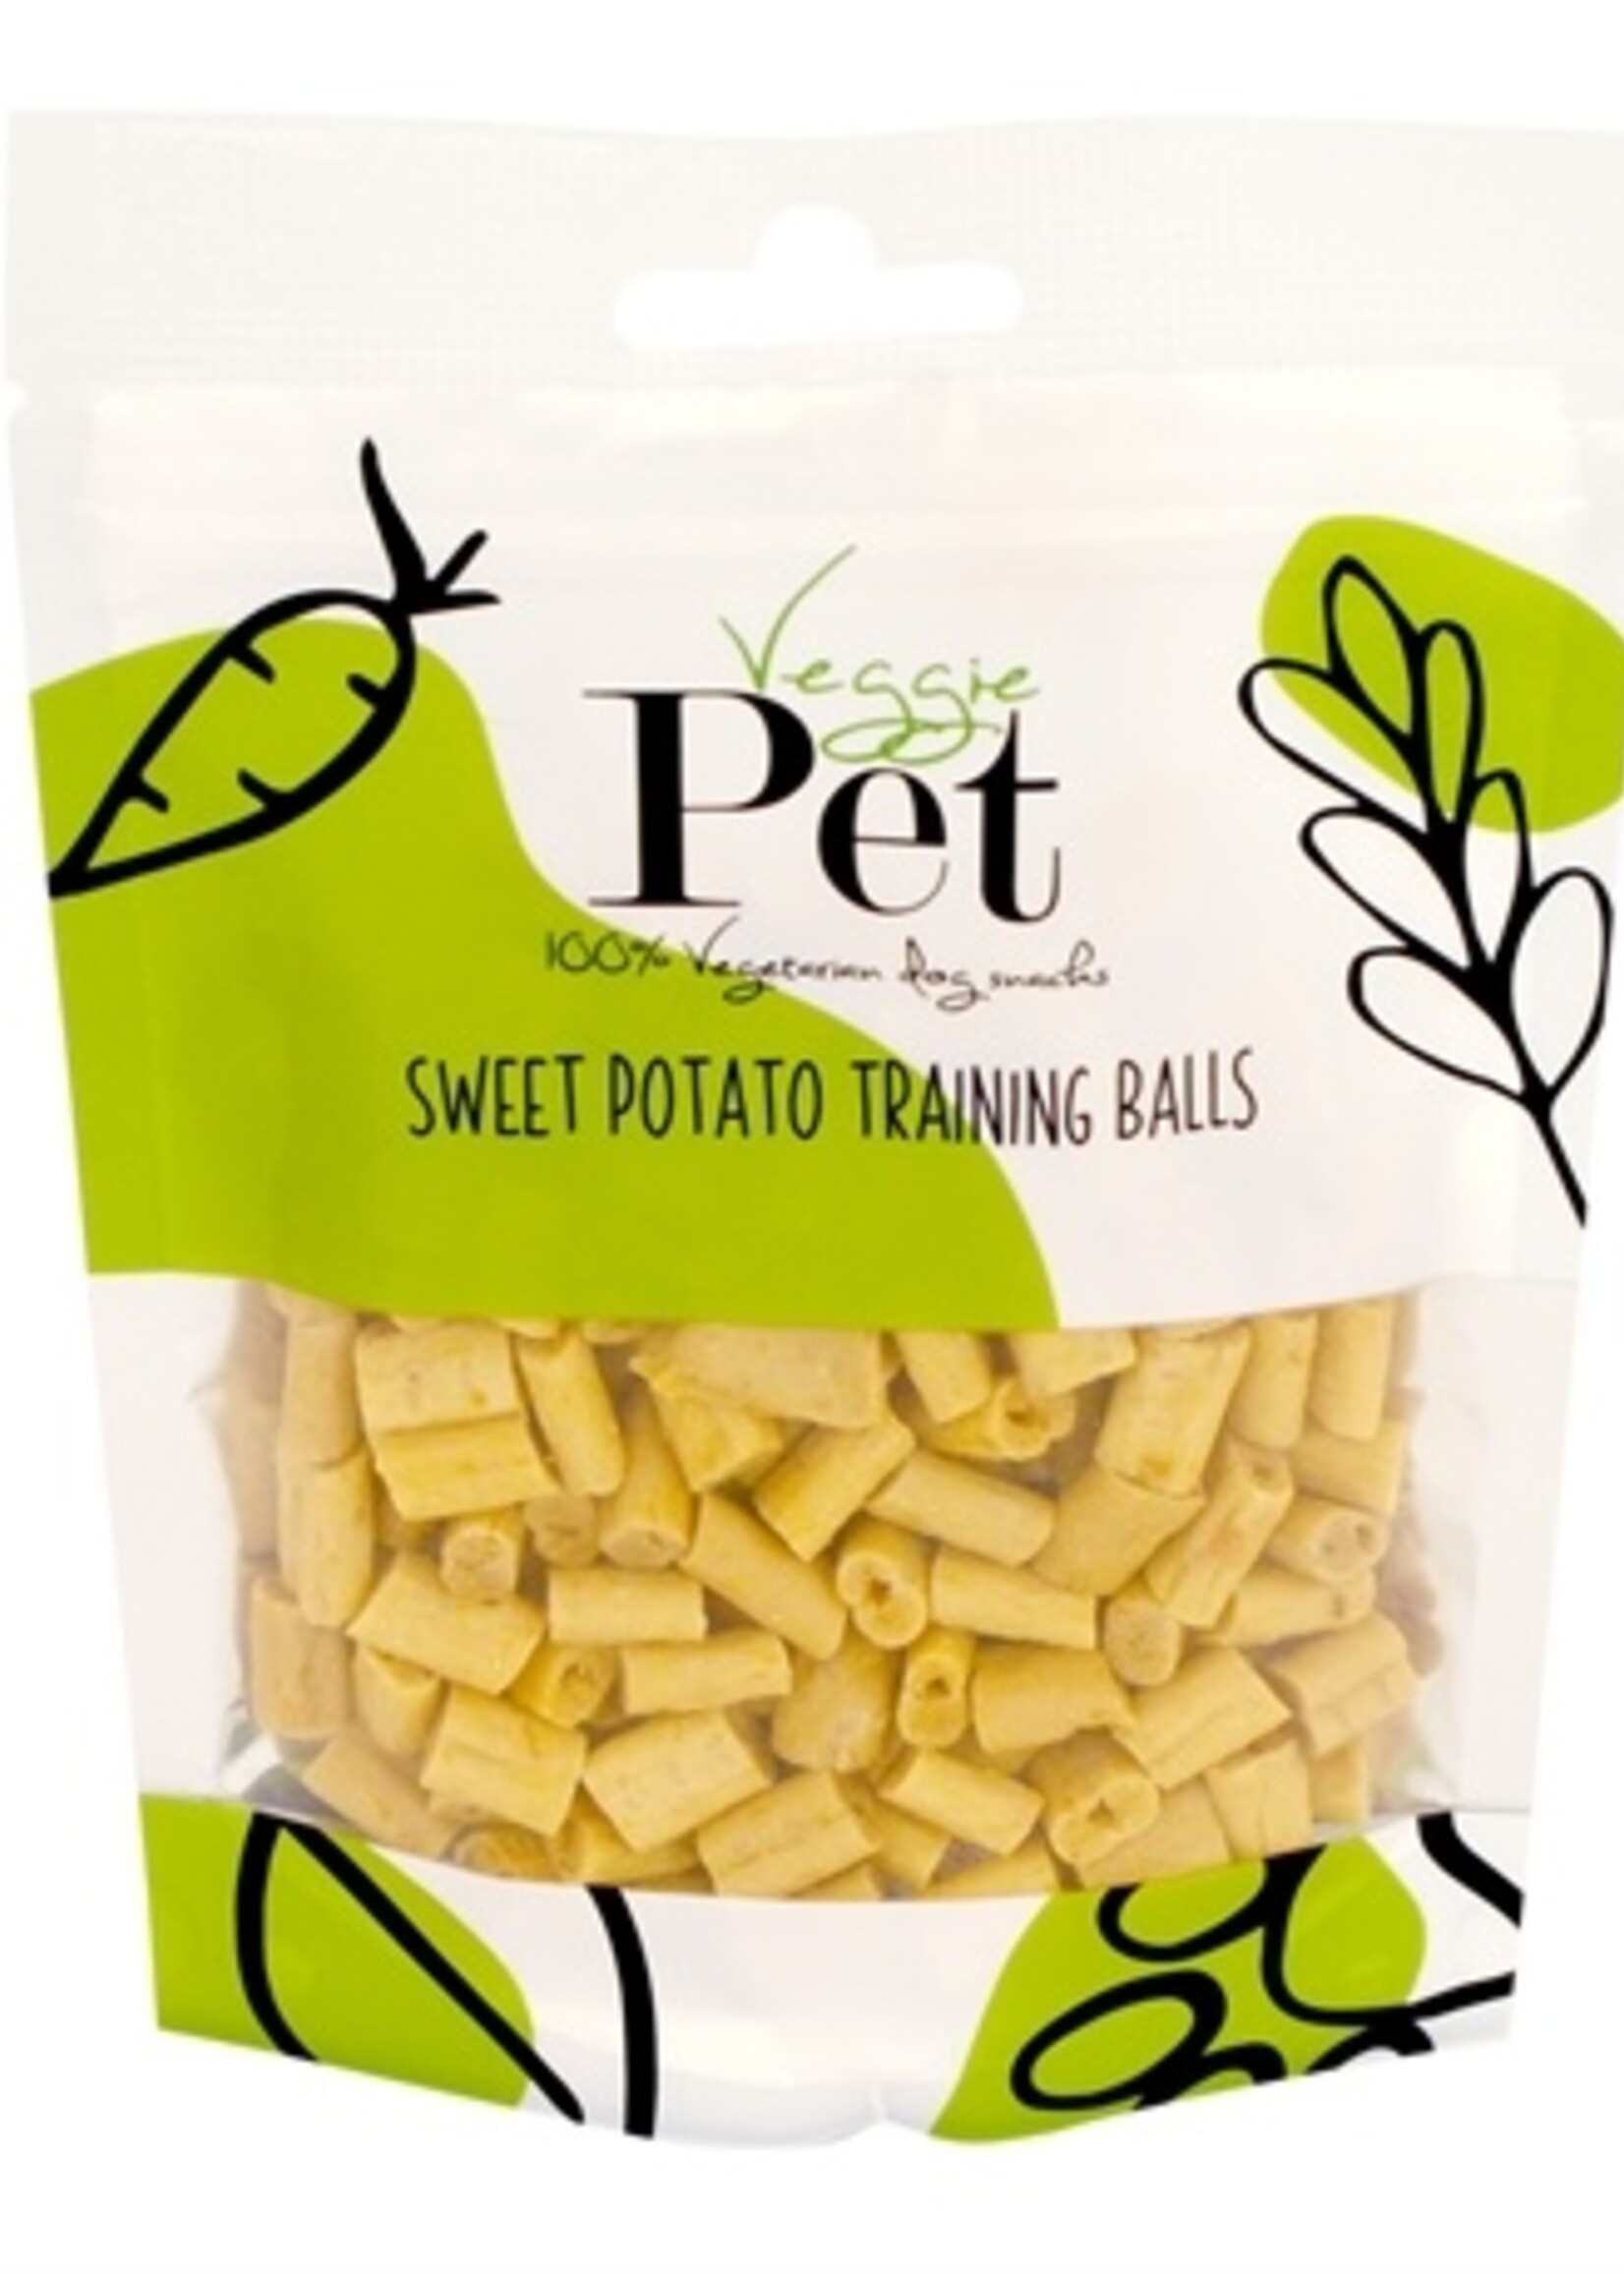 Veggie pet Veggie pet sweet potato training balls